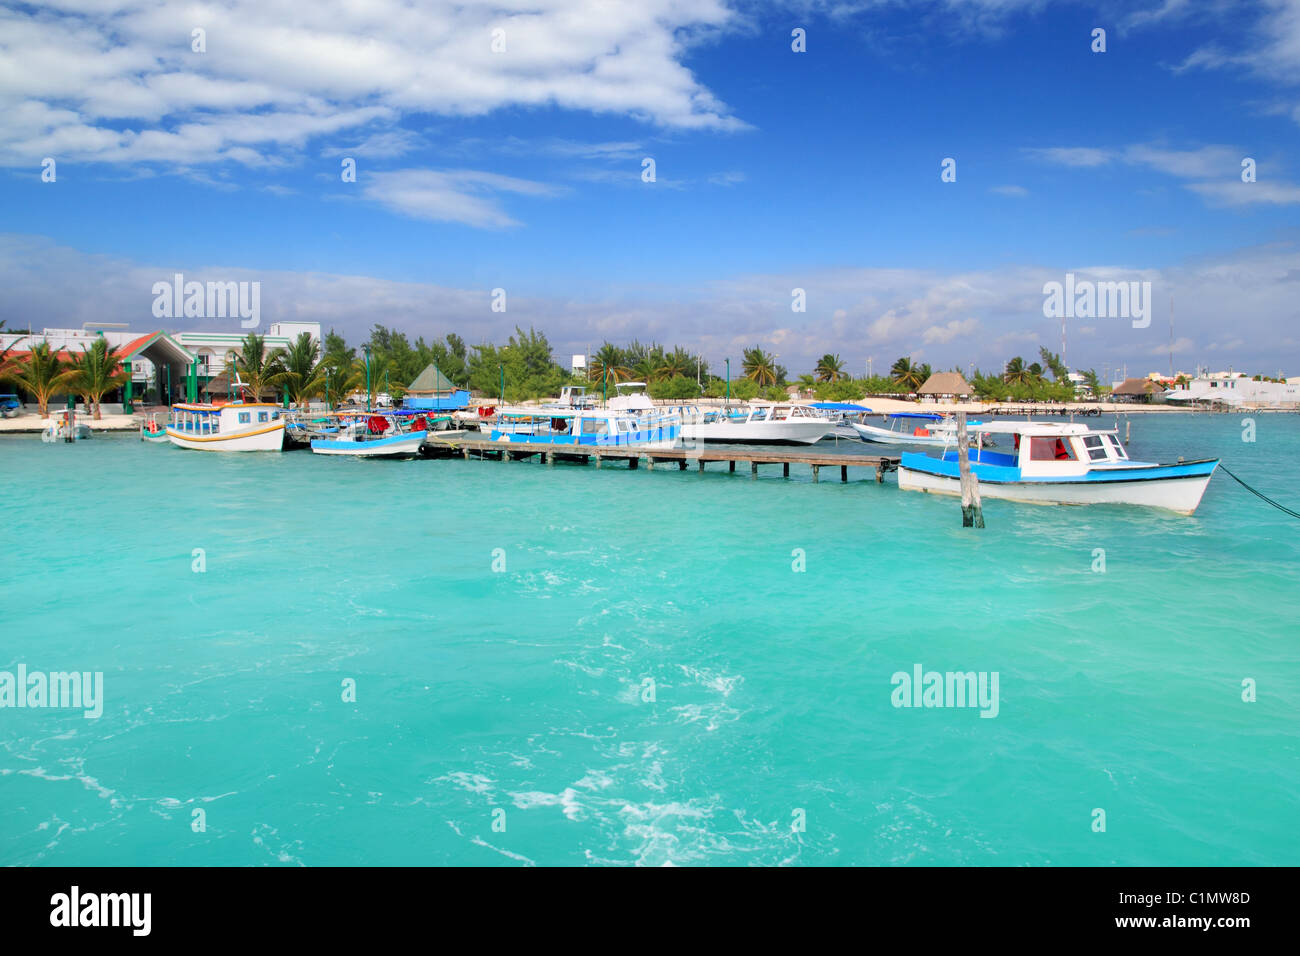 Puerto Juarez Cancun Quintana Roo tropicali dei Caraibi barche Foto Stock